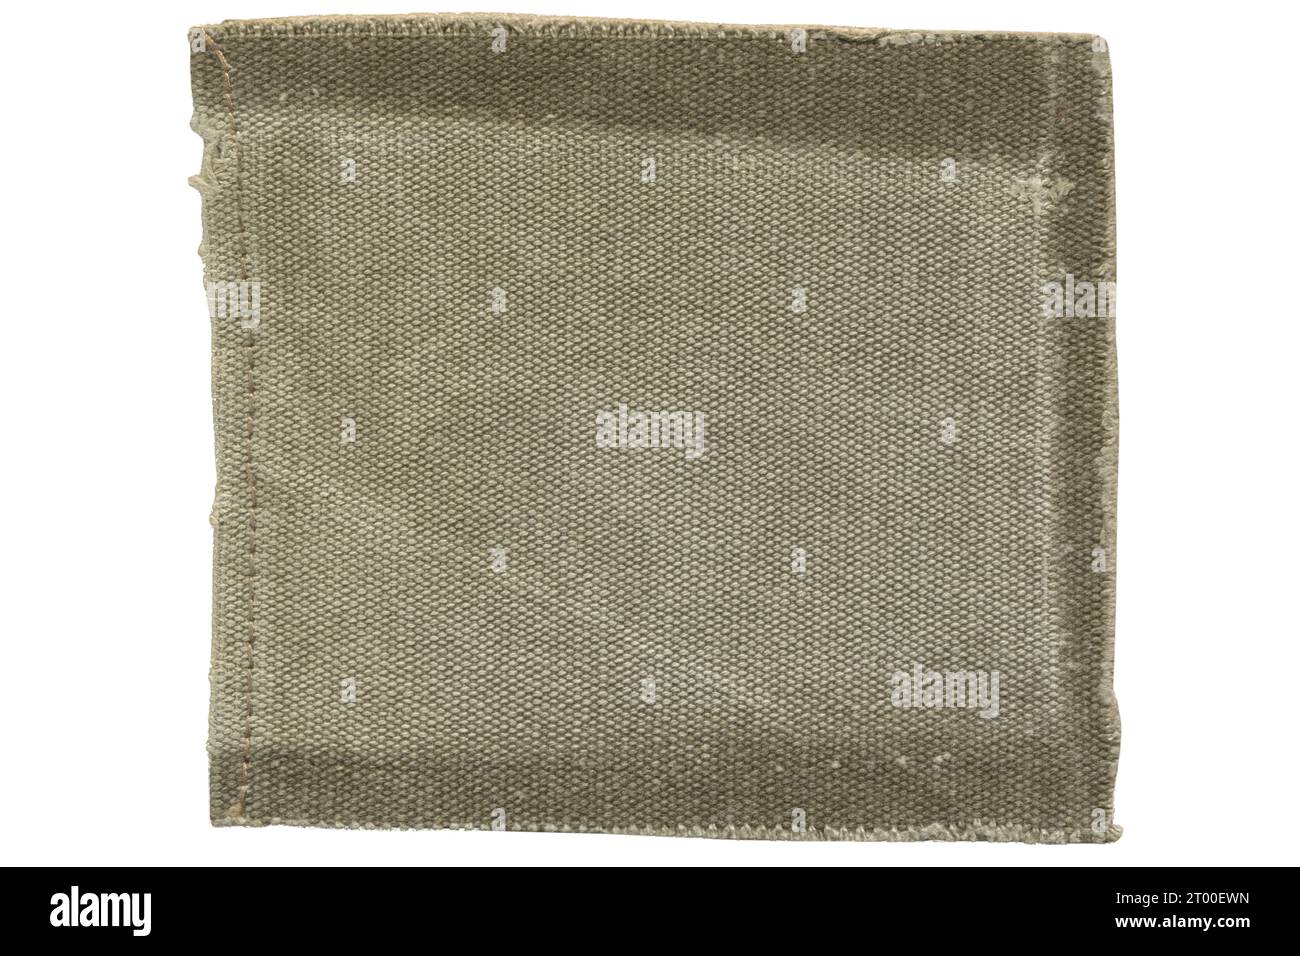 khaki cotton canvas. texture. High resolution isolated on white background Stock Photo